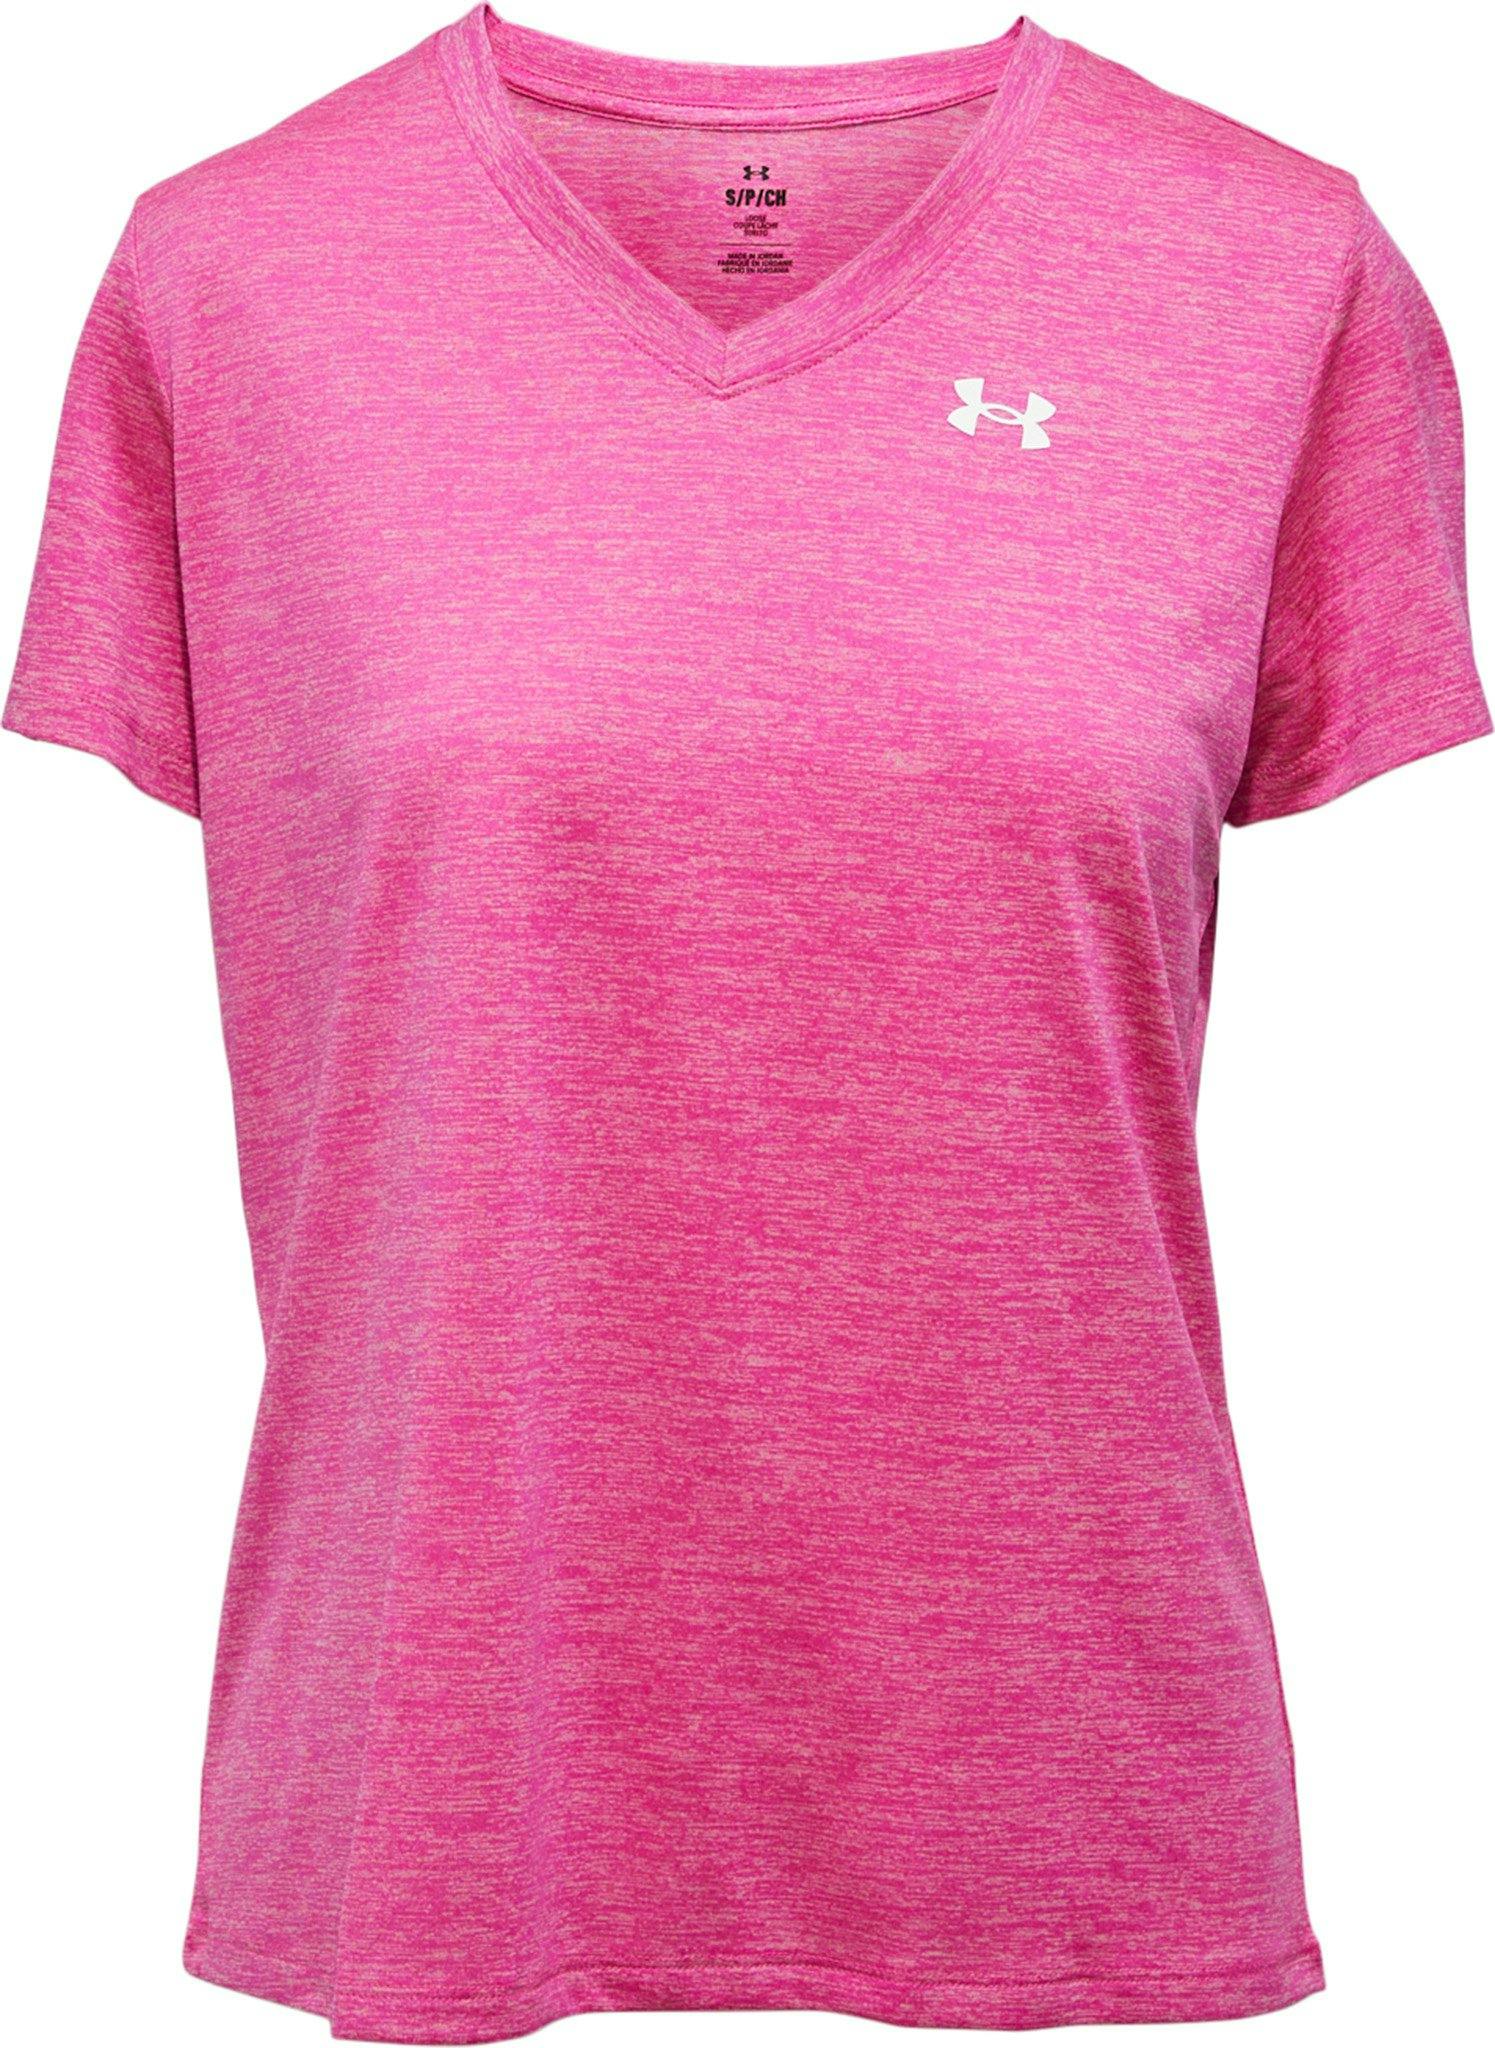 Product image for UA Tech Twist V-Neck Short Sleeve T-Shirt - Women's